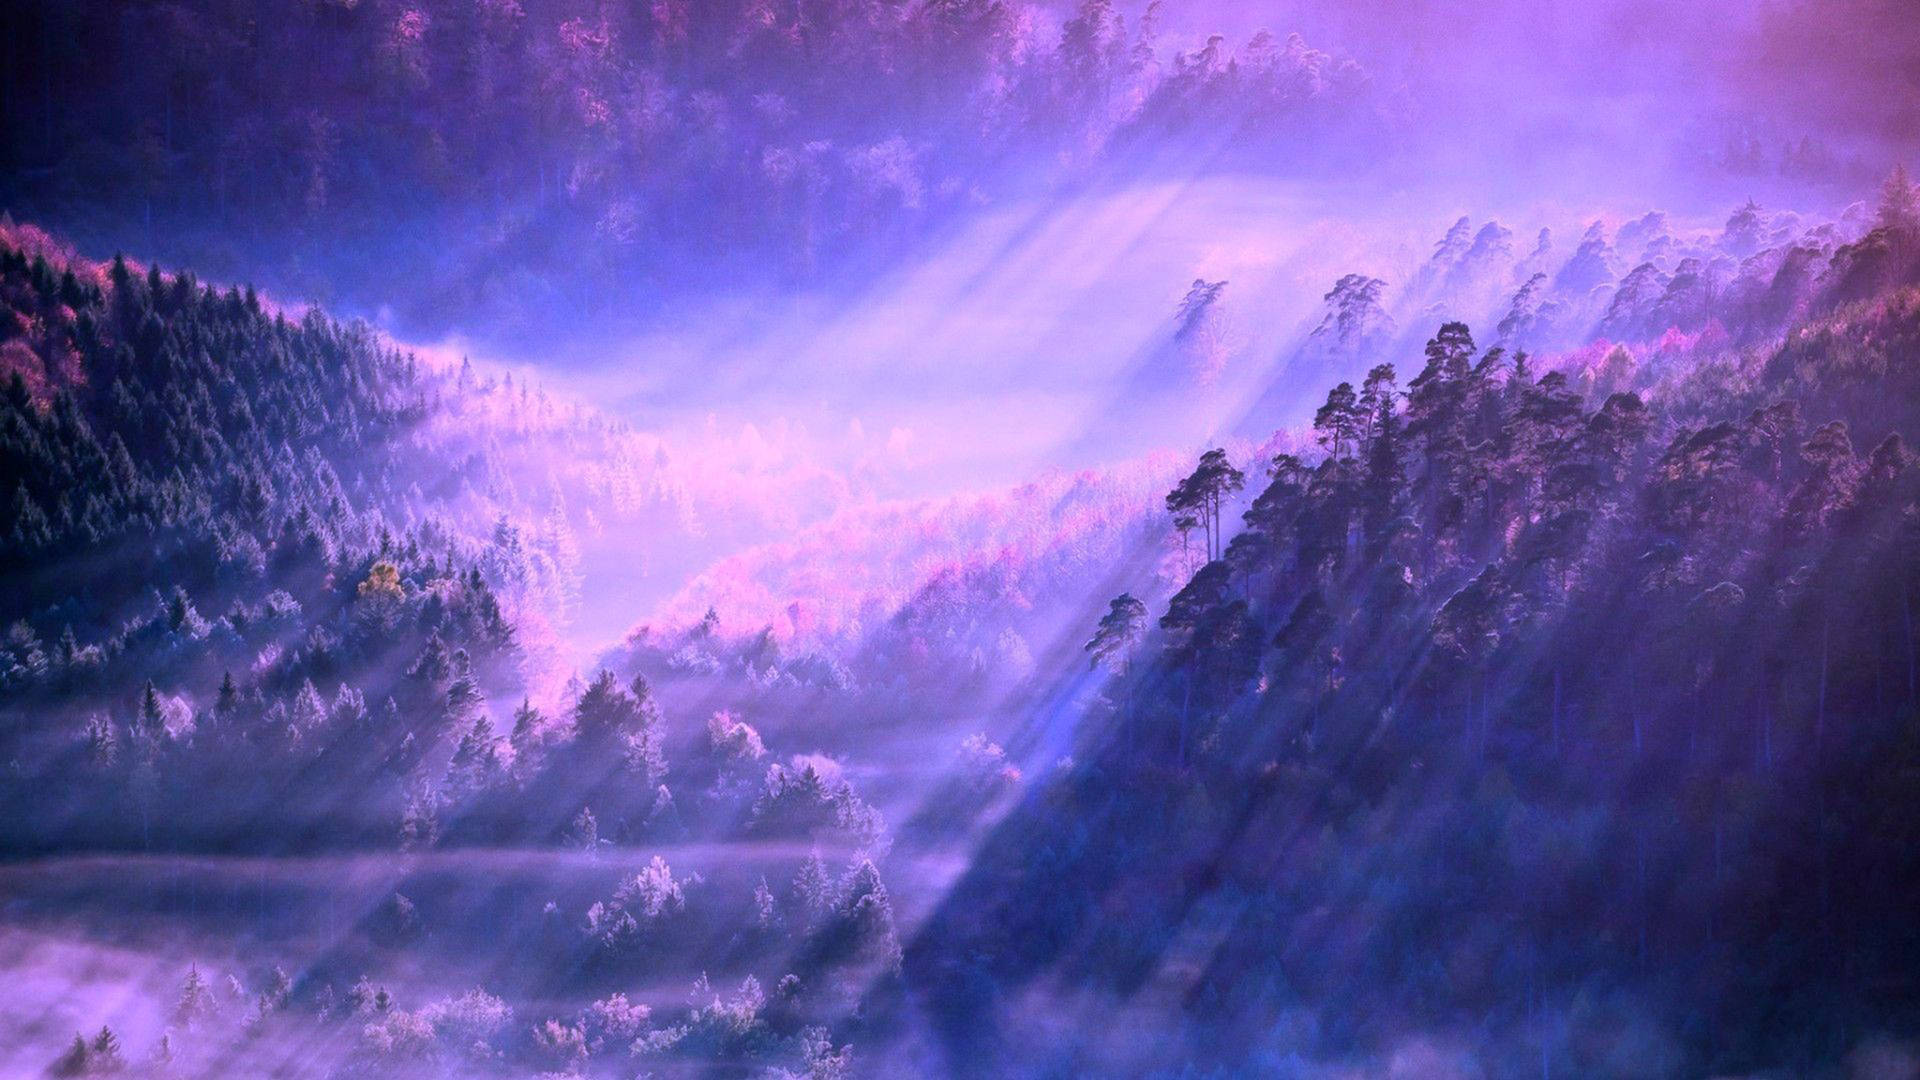 Aesthetic Desktop Foggy Forest Background